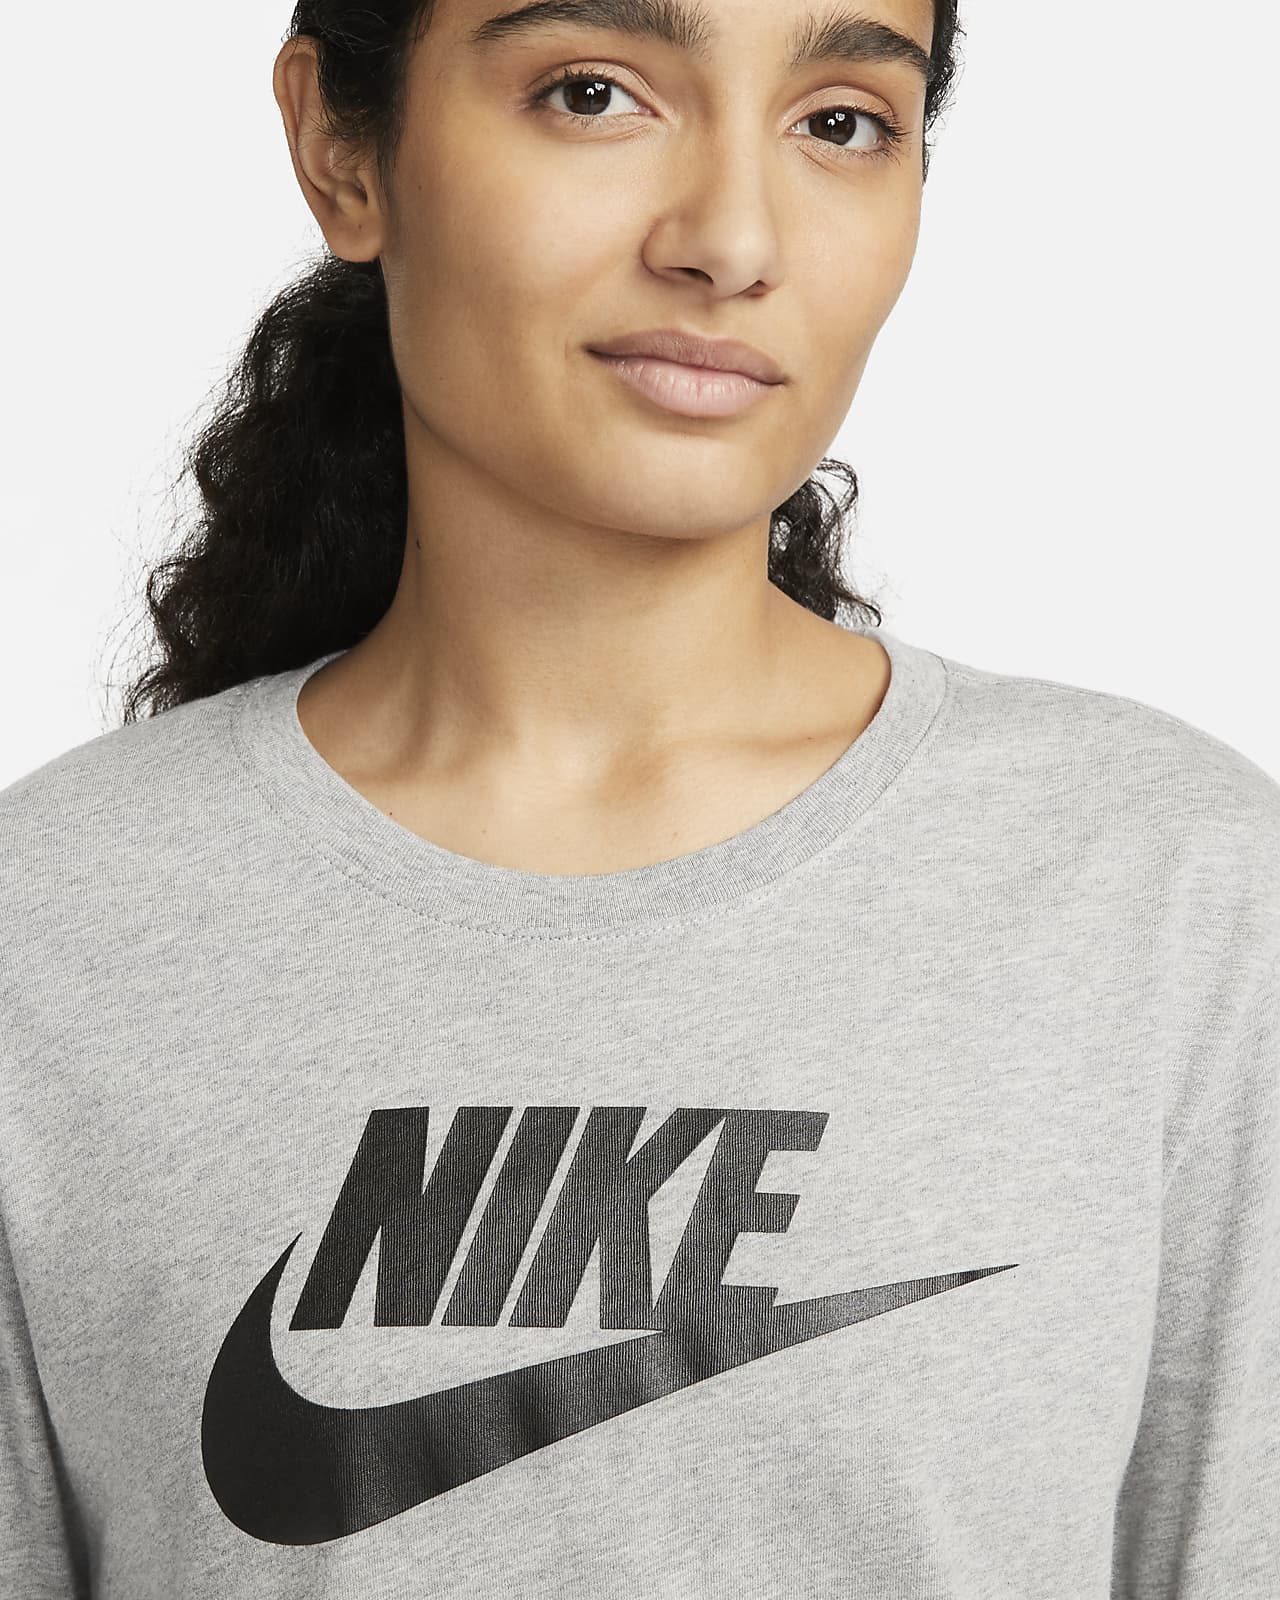 T-shirt sportswear essential icon futura corail femme - Nike